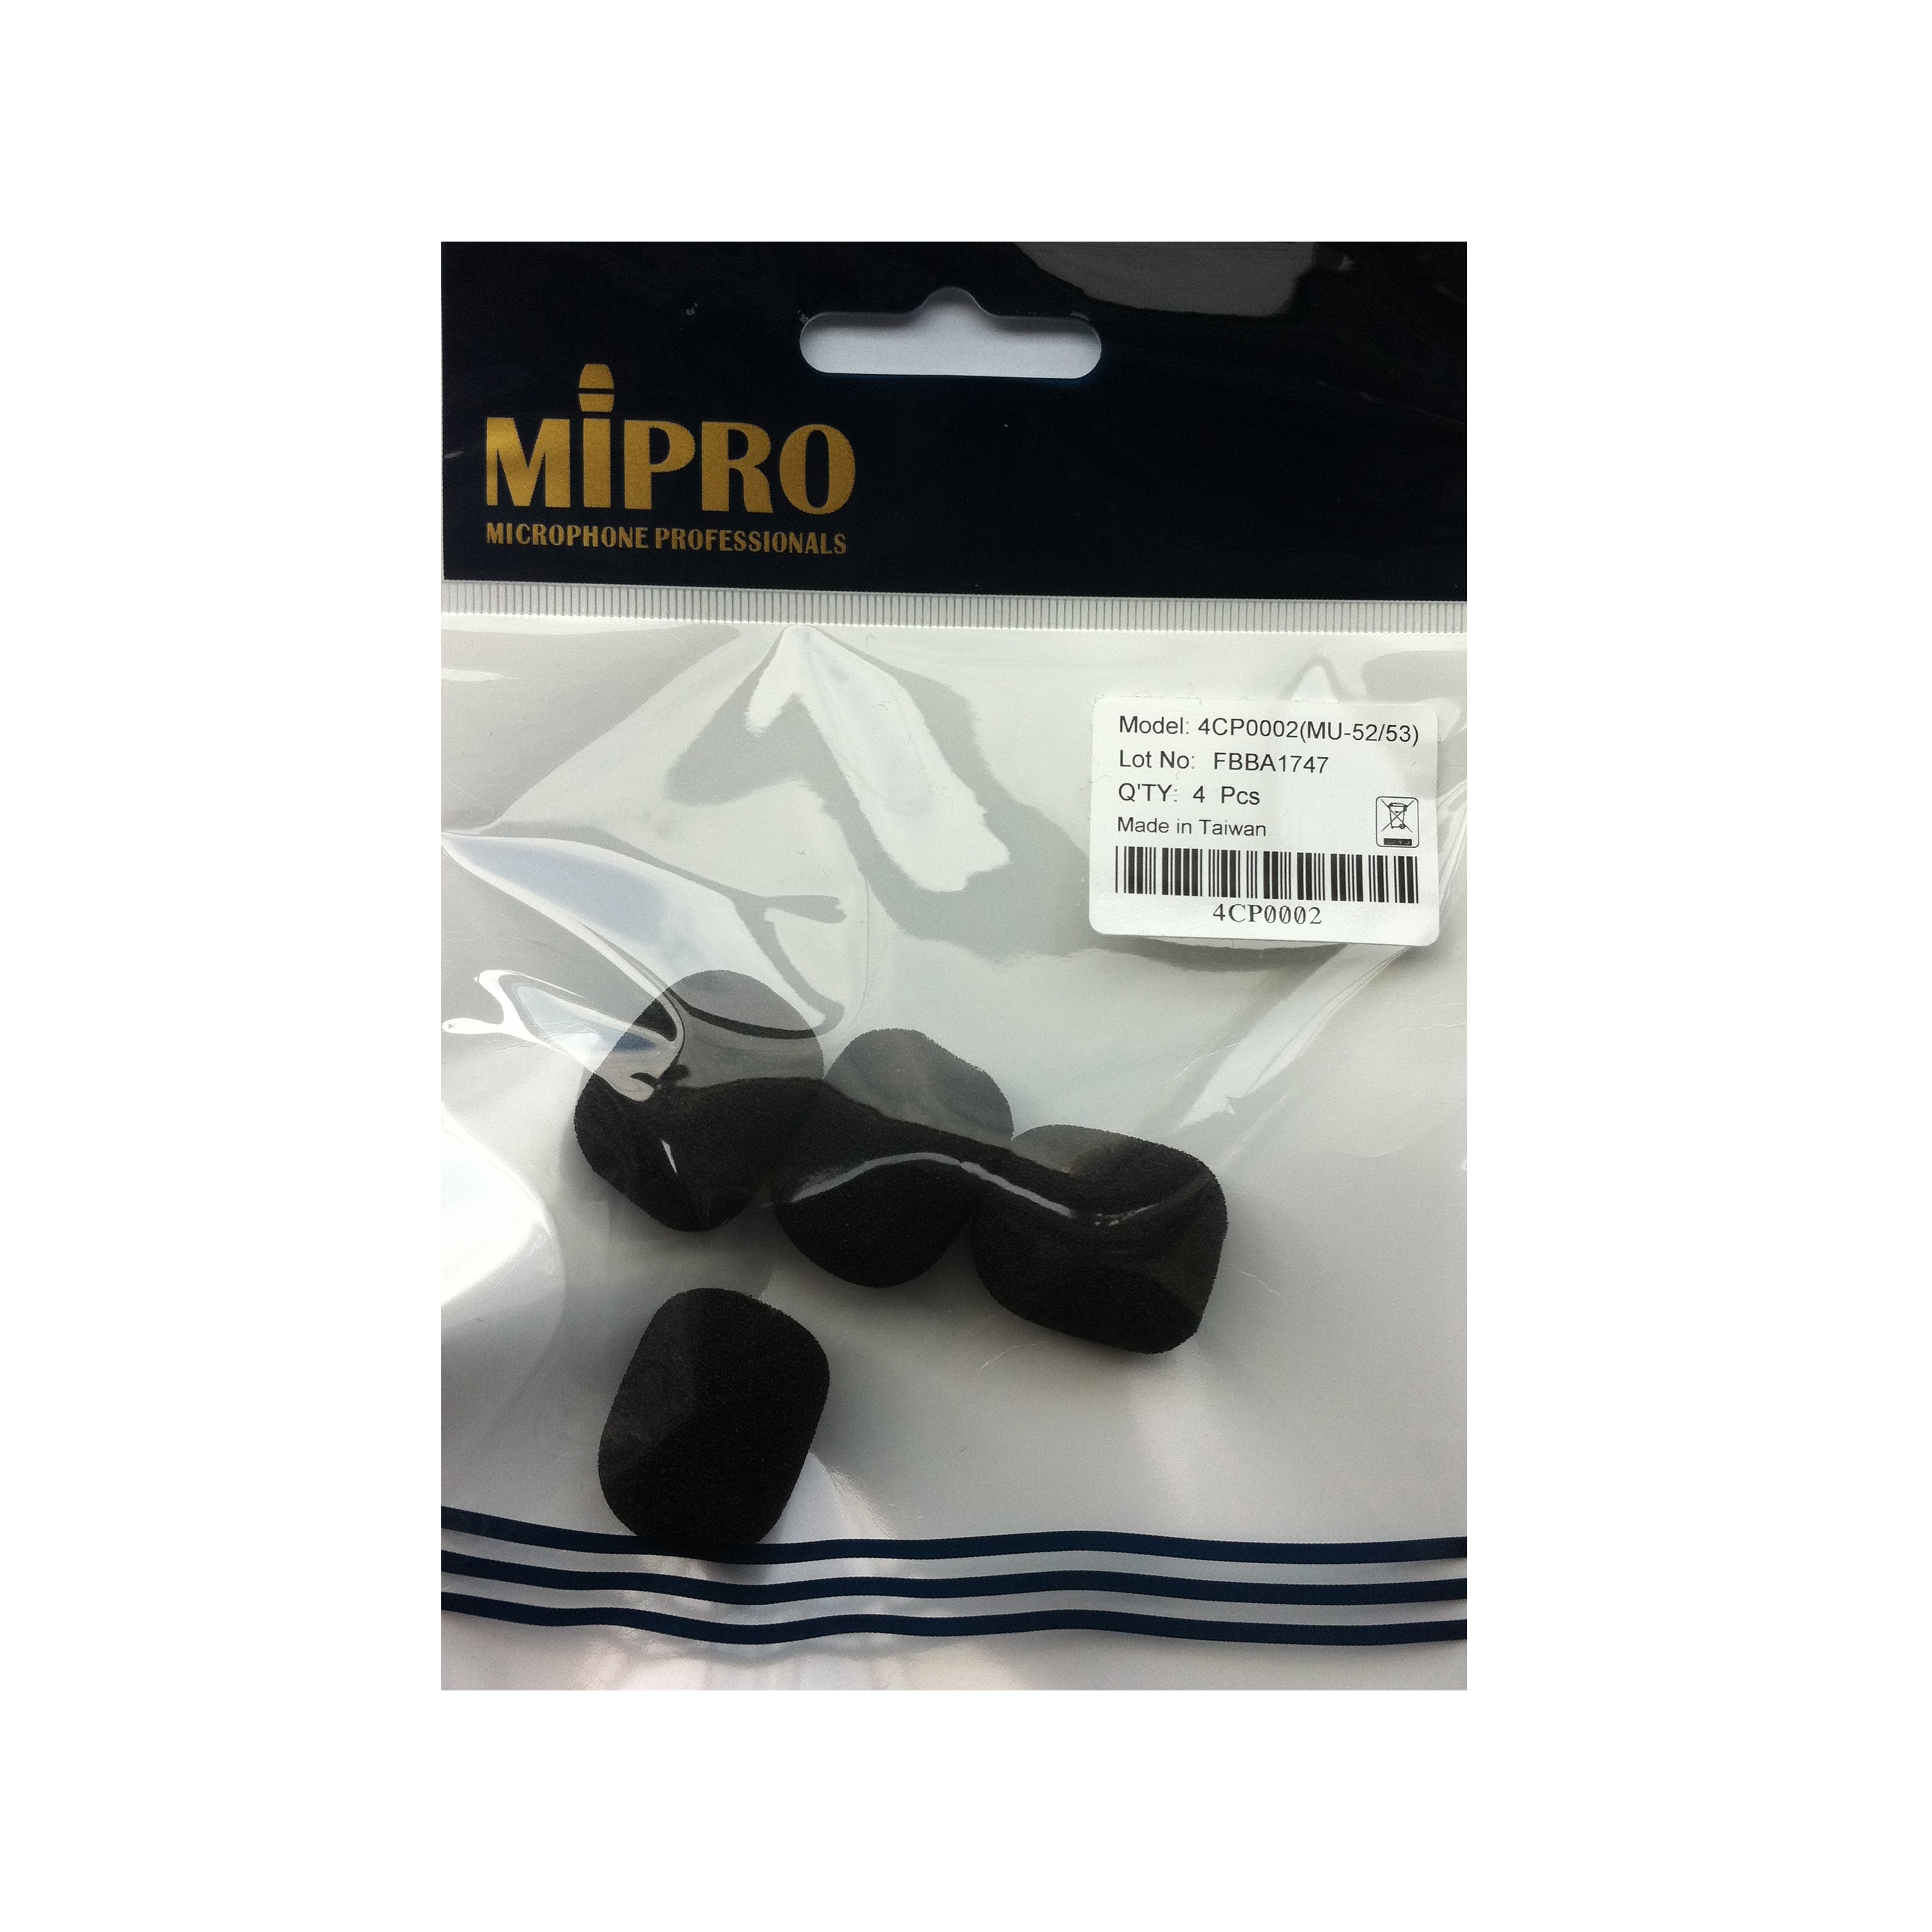 MiPro 4CP0002 Foam Pop Shield for MiPro MU-53L & MU-53H/MH-53HN Headset Microphones (Pack of 4) - Black